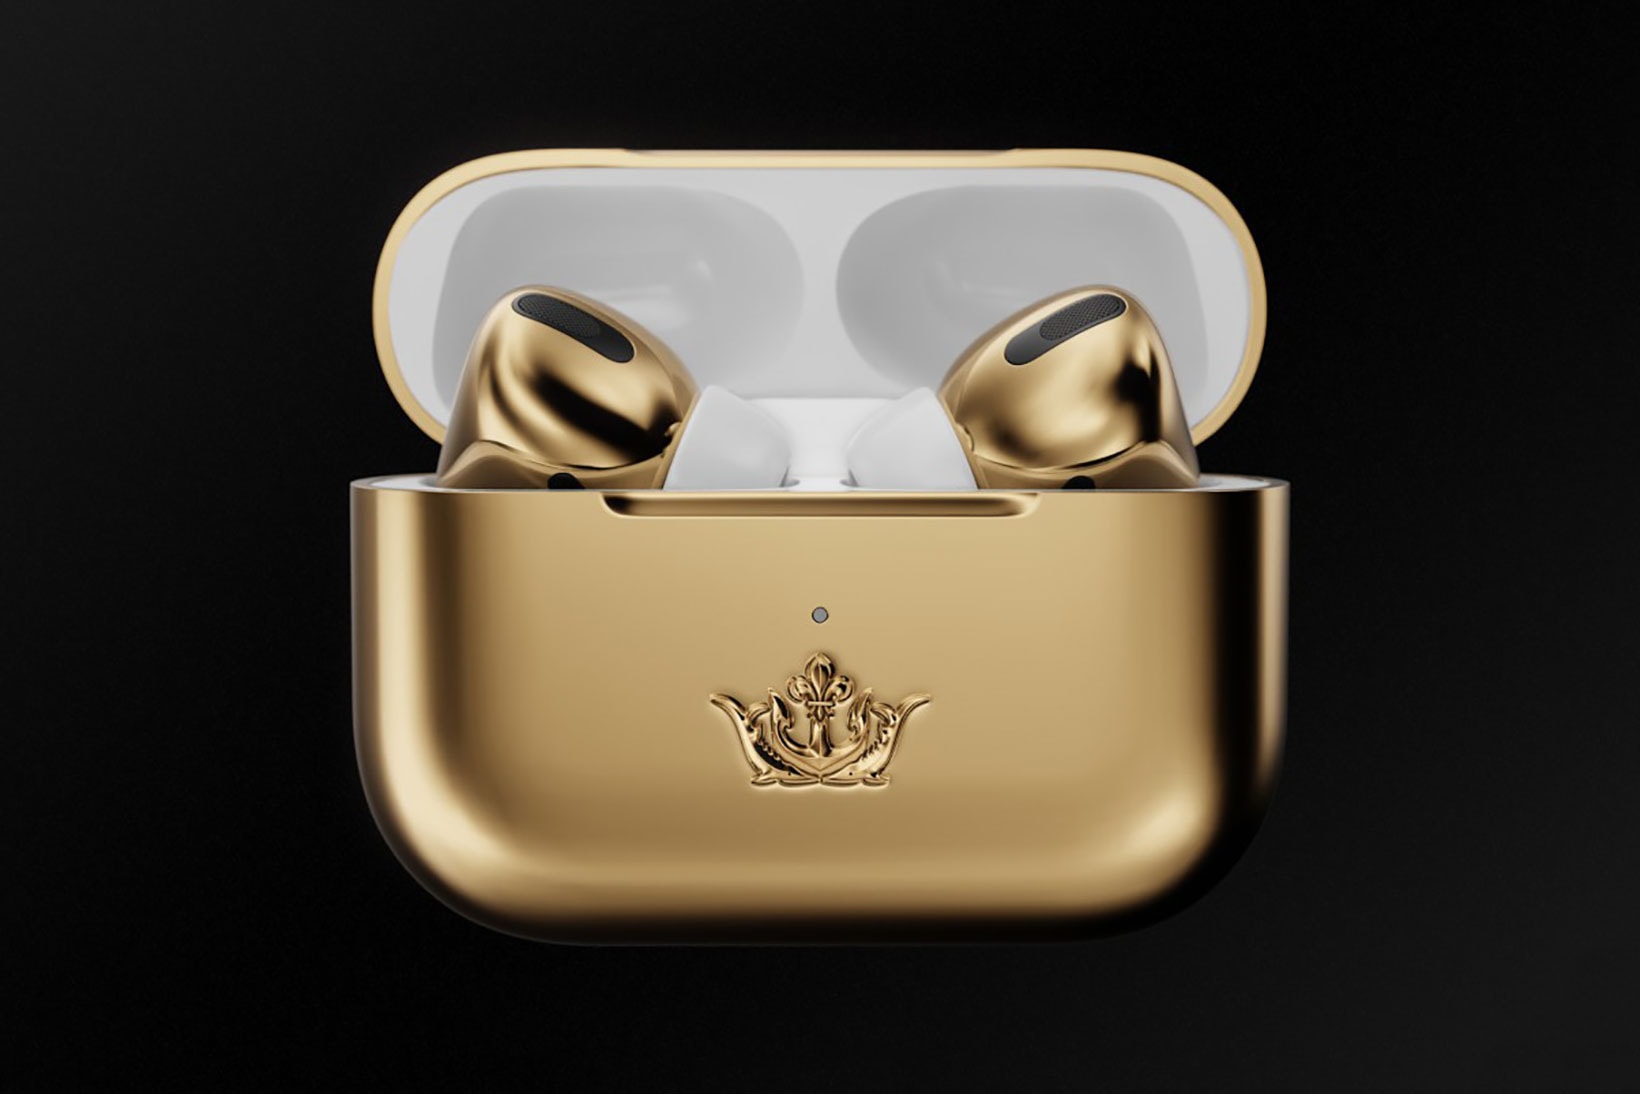 apple airpods pro 3 caviar gold wireless earphones music accessories tech